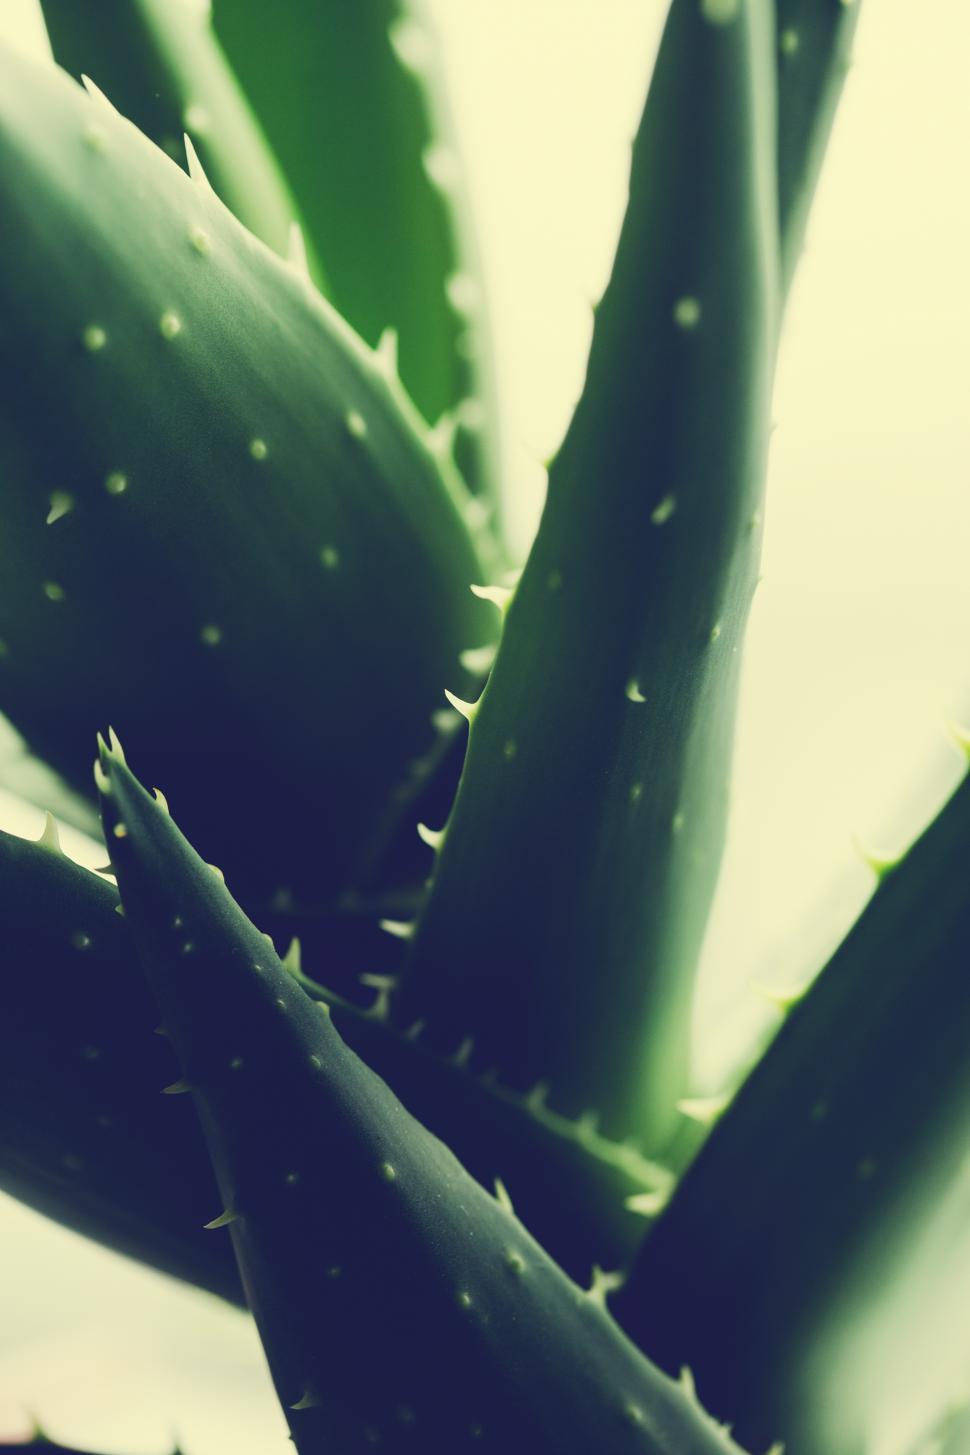 Free Image of Aloe vera plant detailed 